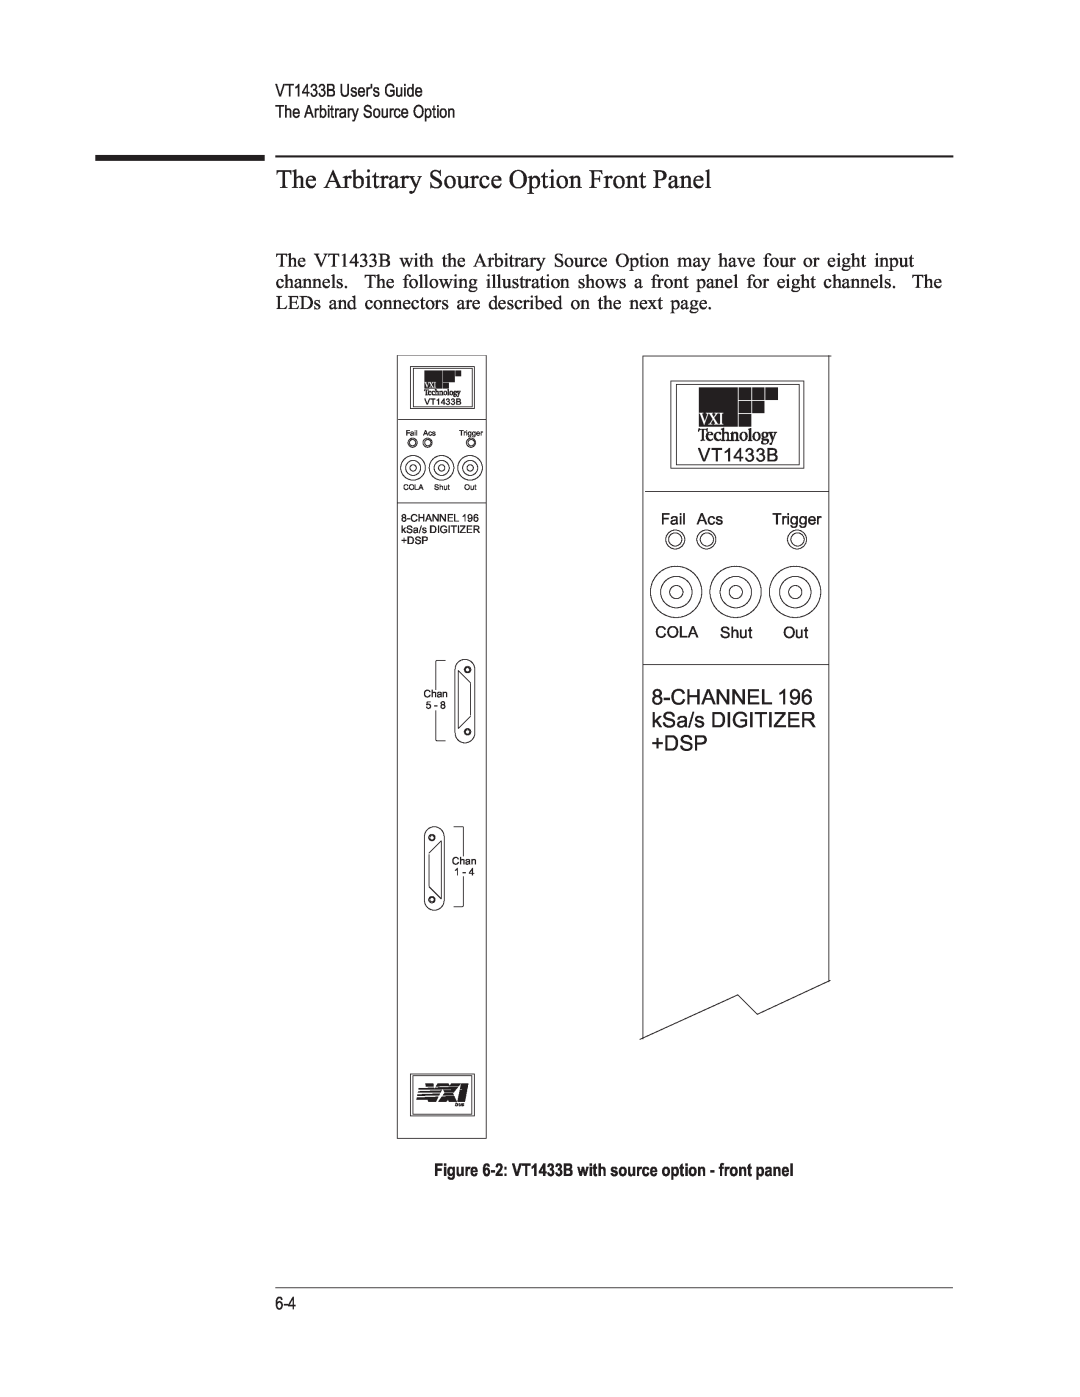 VXI VT1433B manual The Arbitrary Source Option Front Panel, CHANNEL196 kSa/s DIGITIZER +DSP 